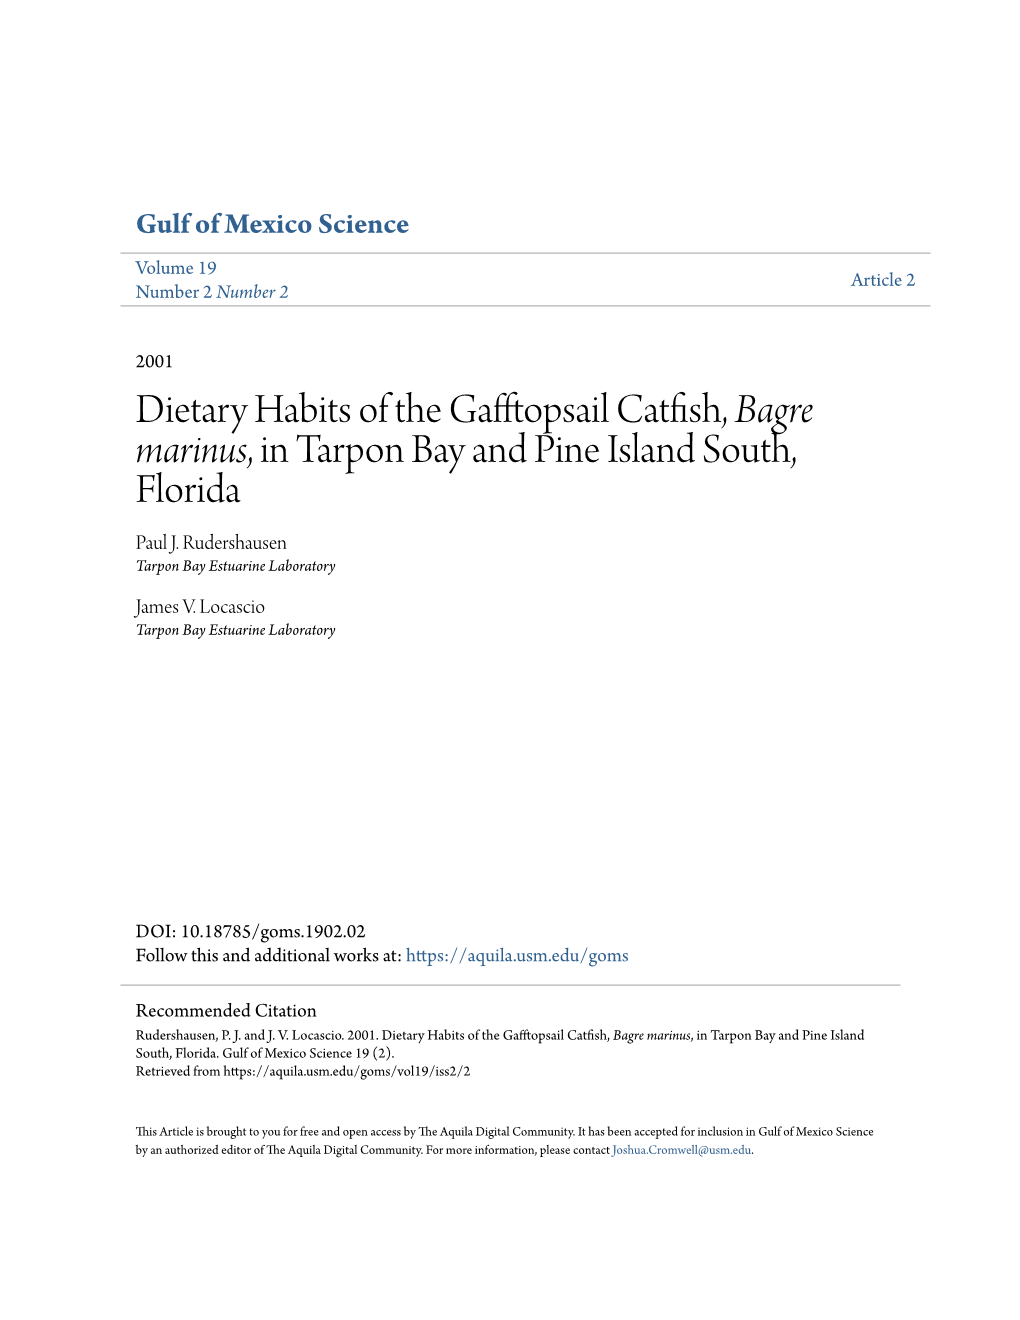 Dietary Habits of the Gafftopsail Catfish, Bagre Marinus, in Tarpon Bay and Pine Island South, Florida Paul J